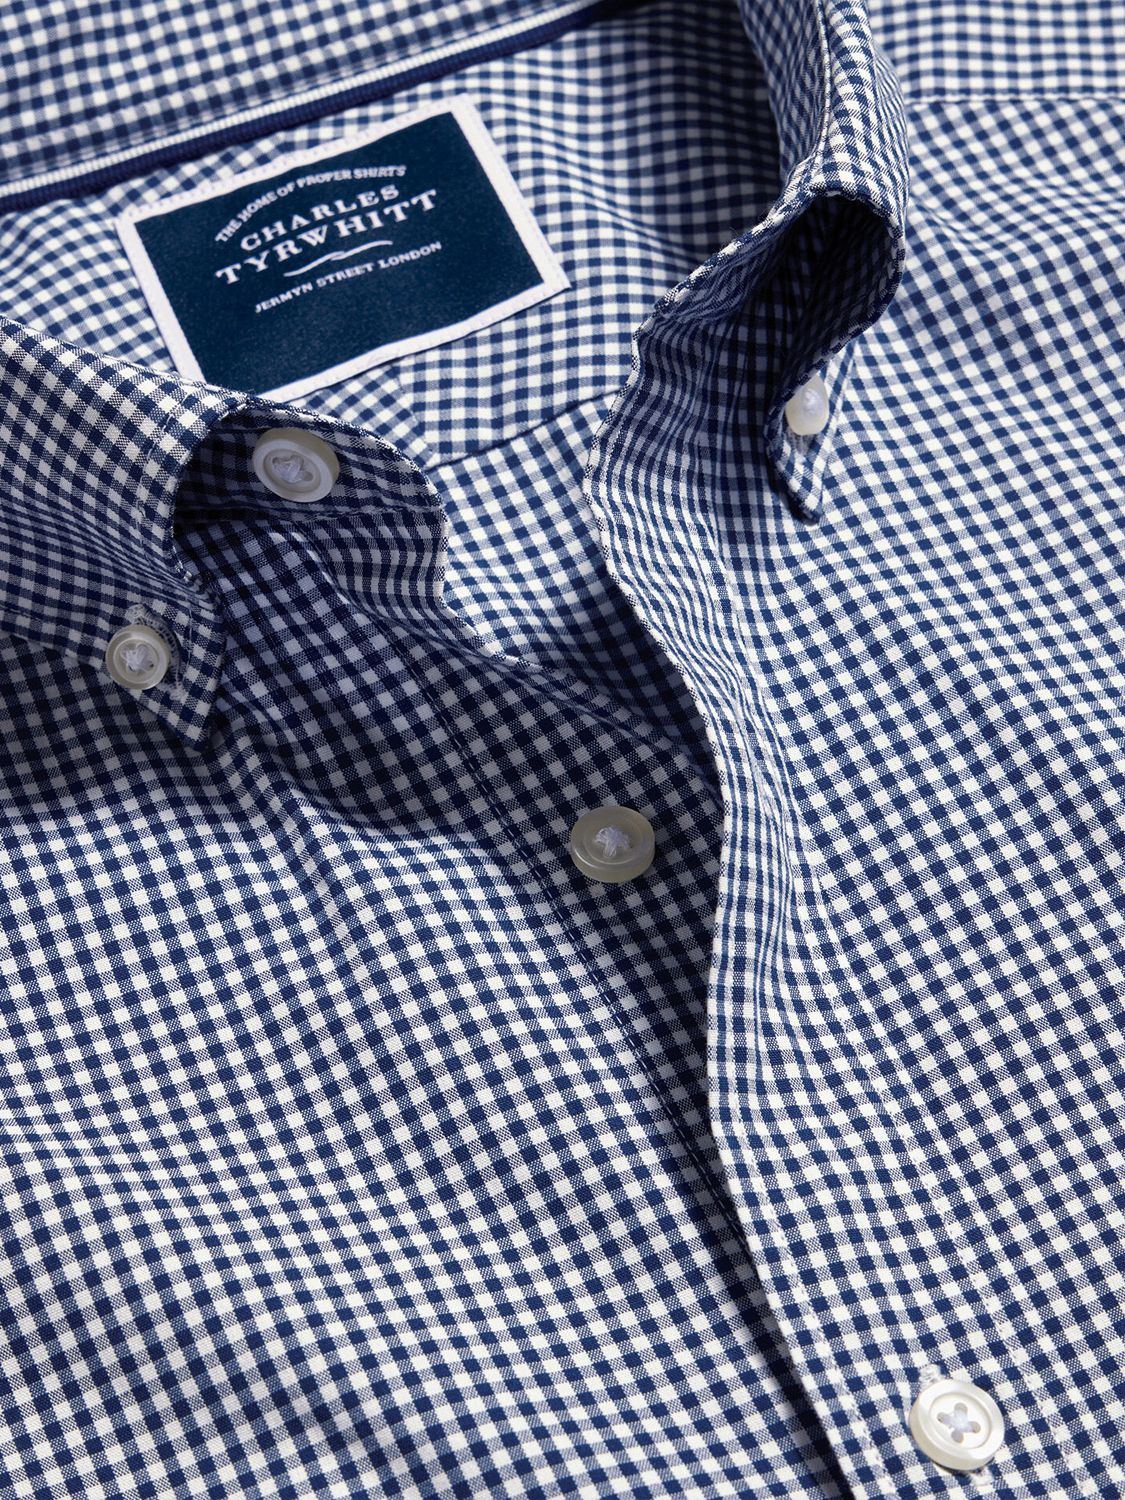 Buy Charles Tyrwhitt Non Iron Poplin Stretch Shirt, Navy Online at johnlewis.com